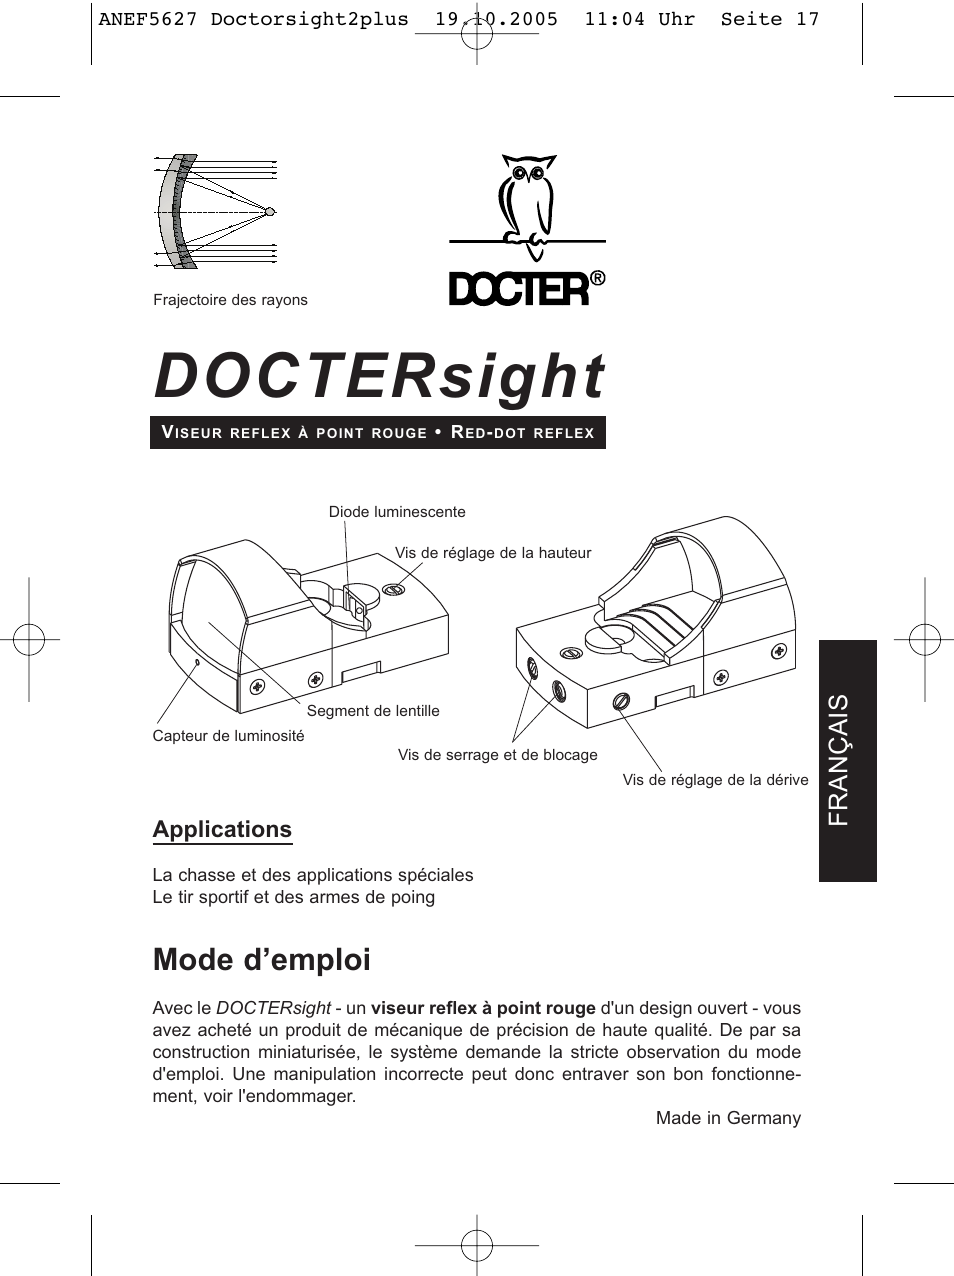 Doctersight, Mode d'emploi, Français | DOCTER DOCTER®sight II plus User  Manual | Page 17 / 32